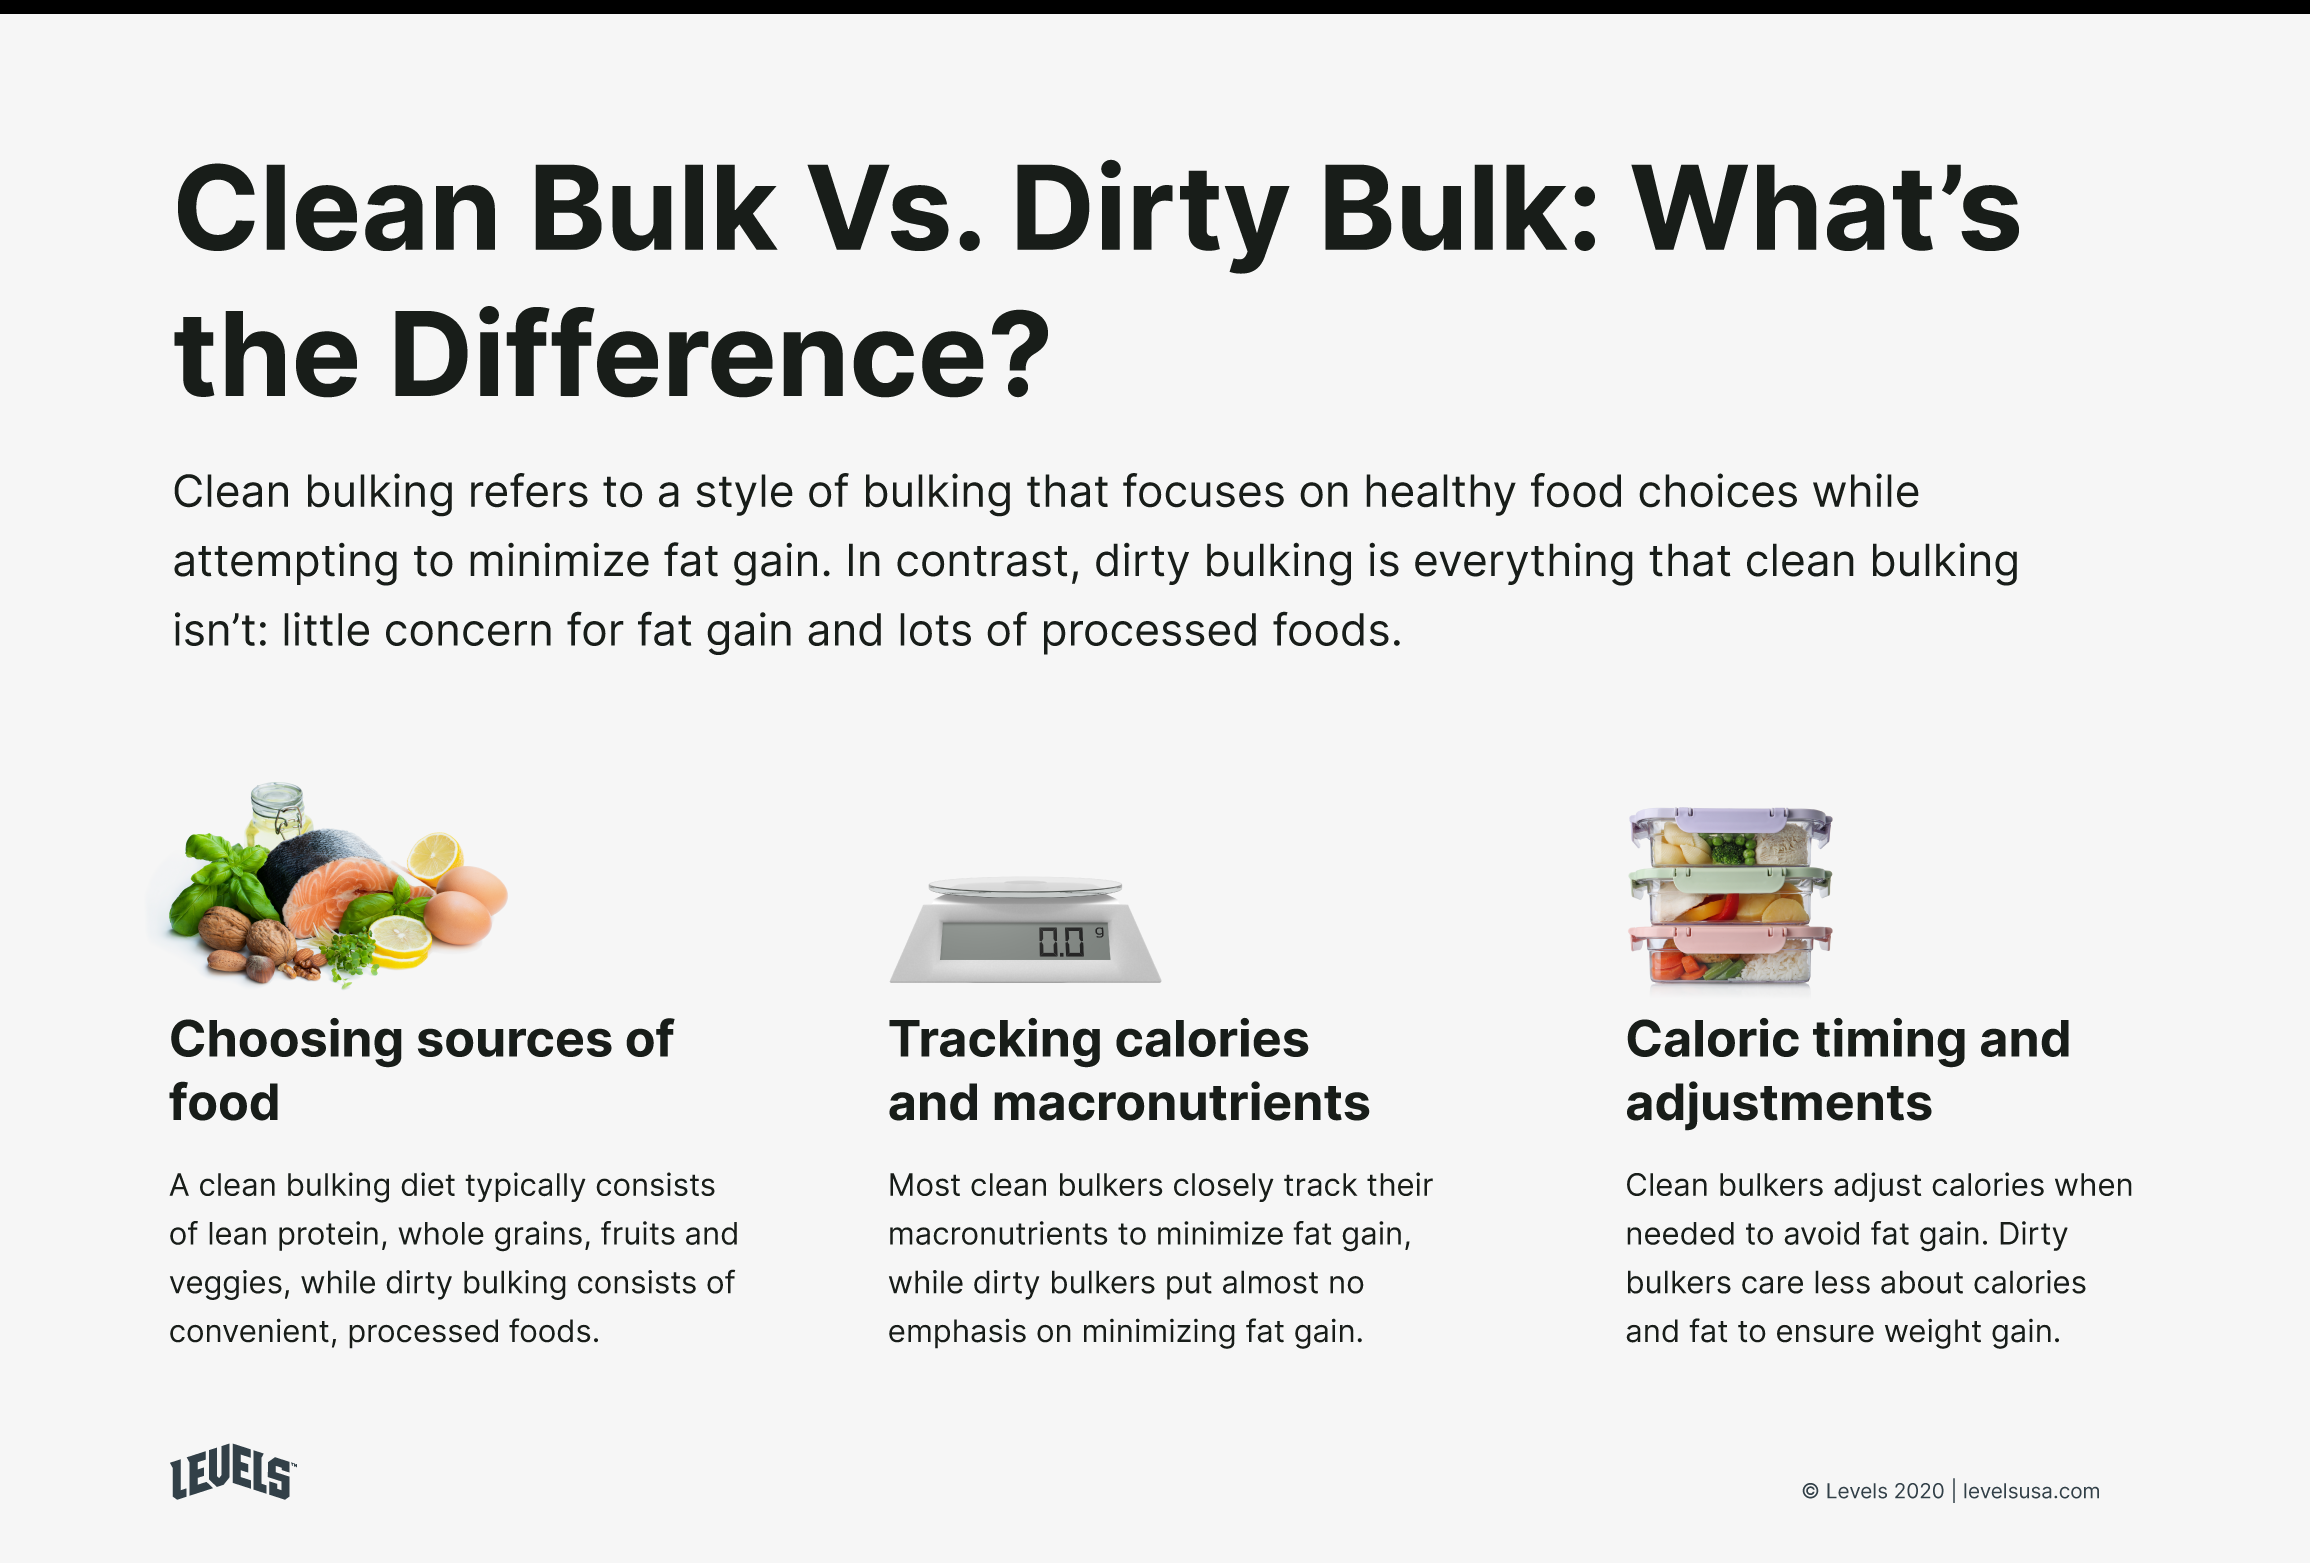 Dirty Bulk vs. Clean Bulk: What is the Best Muscle Building Diet?